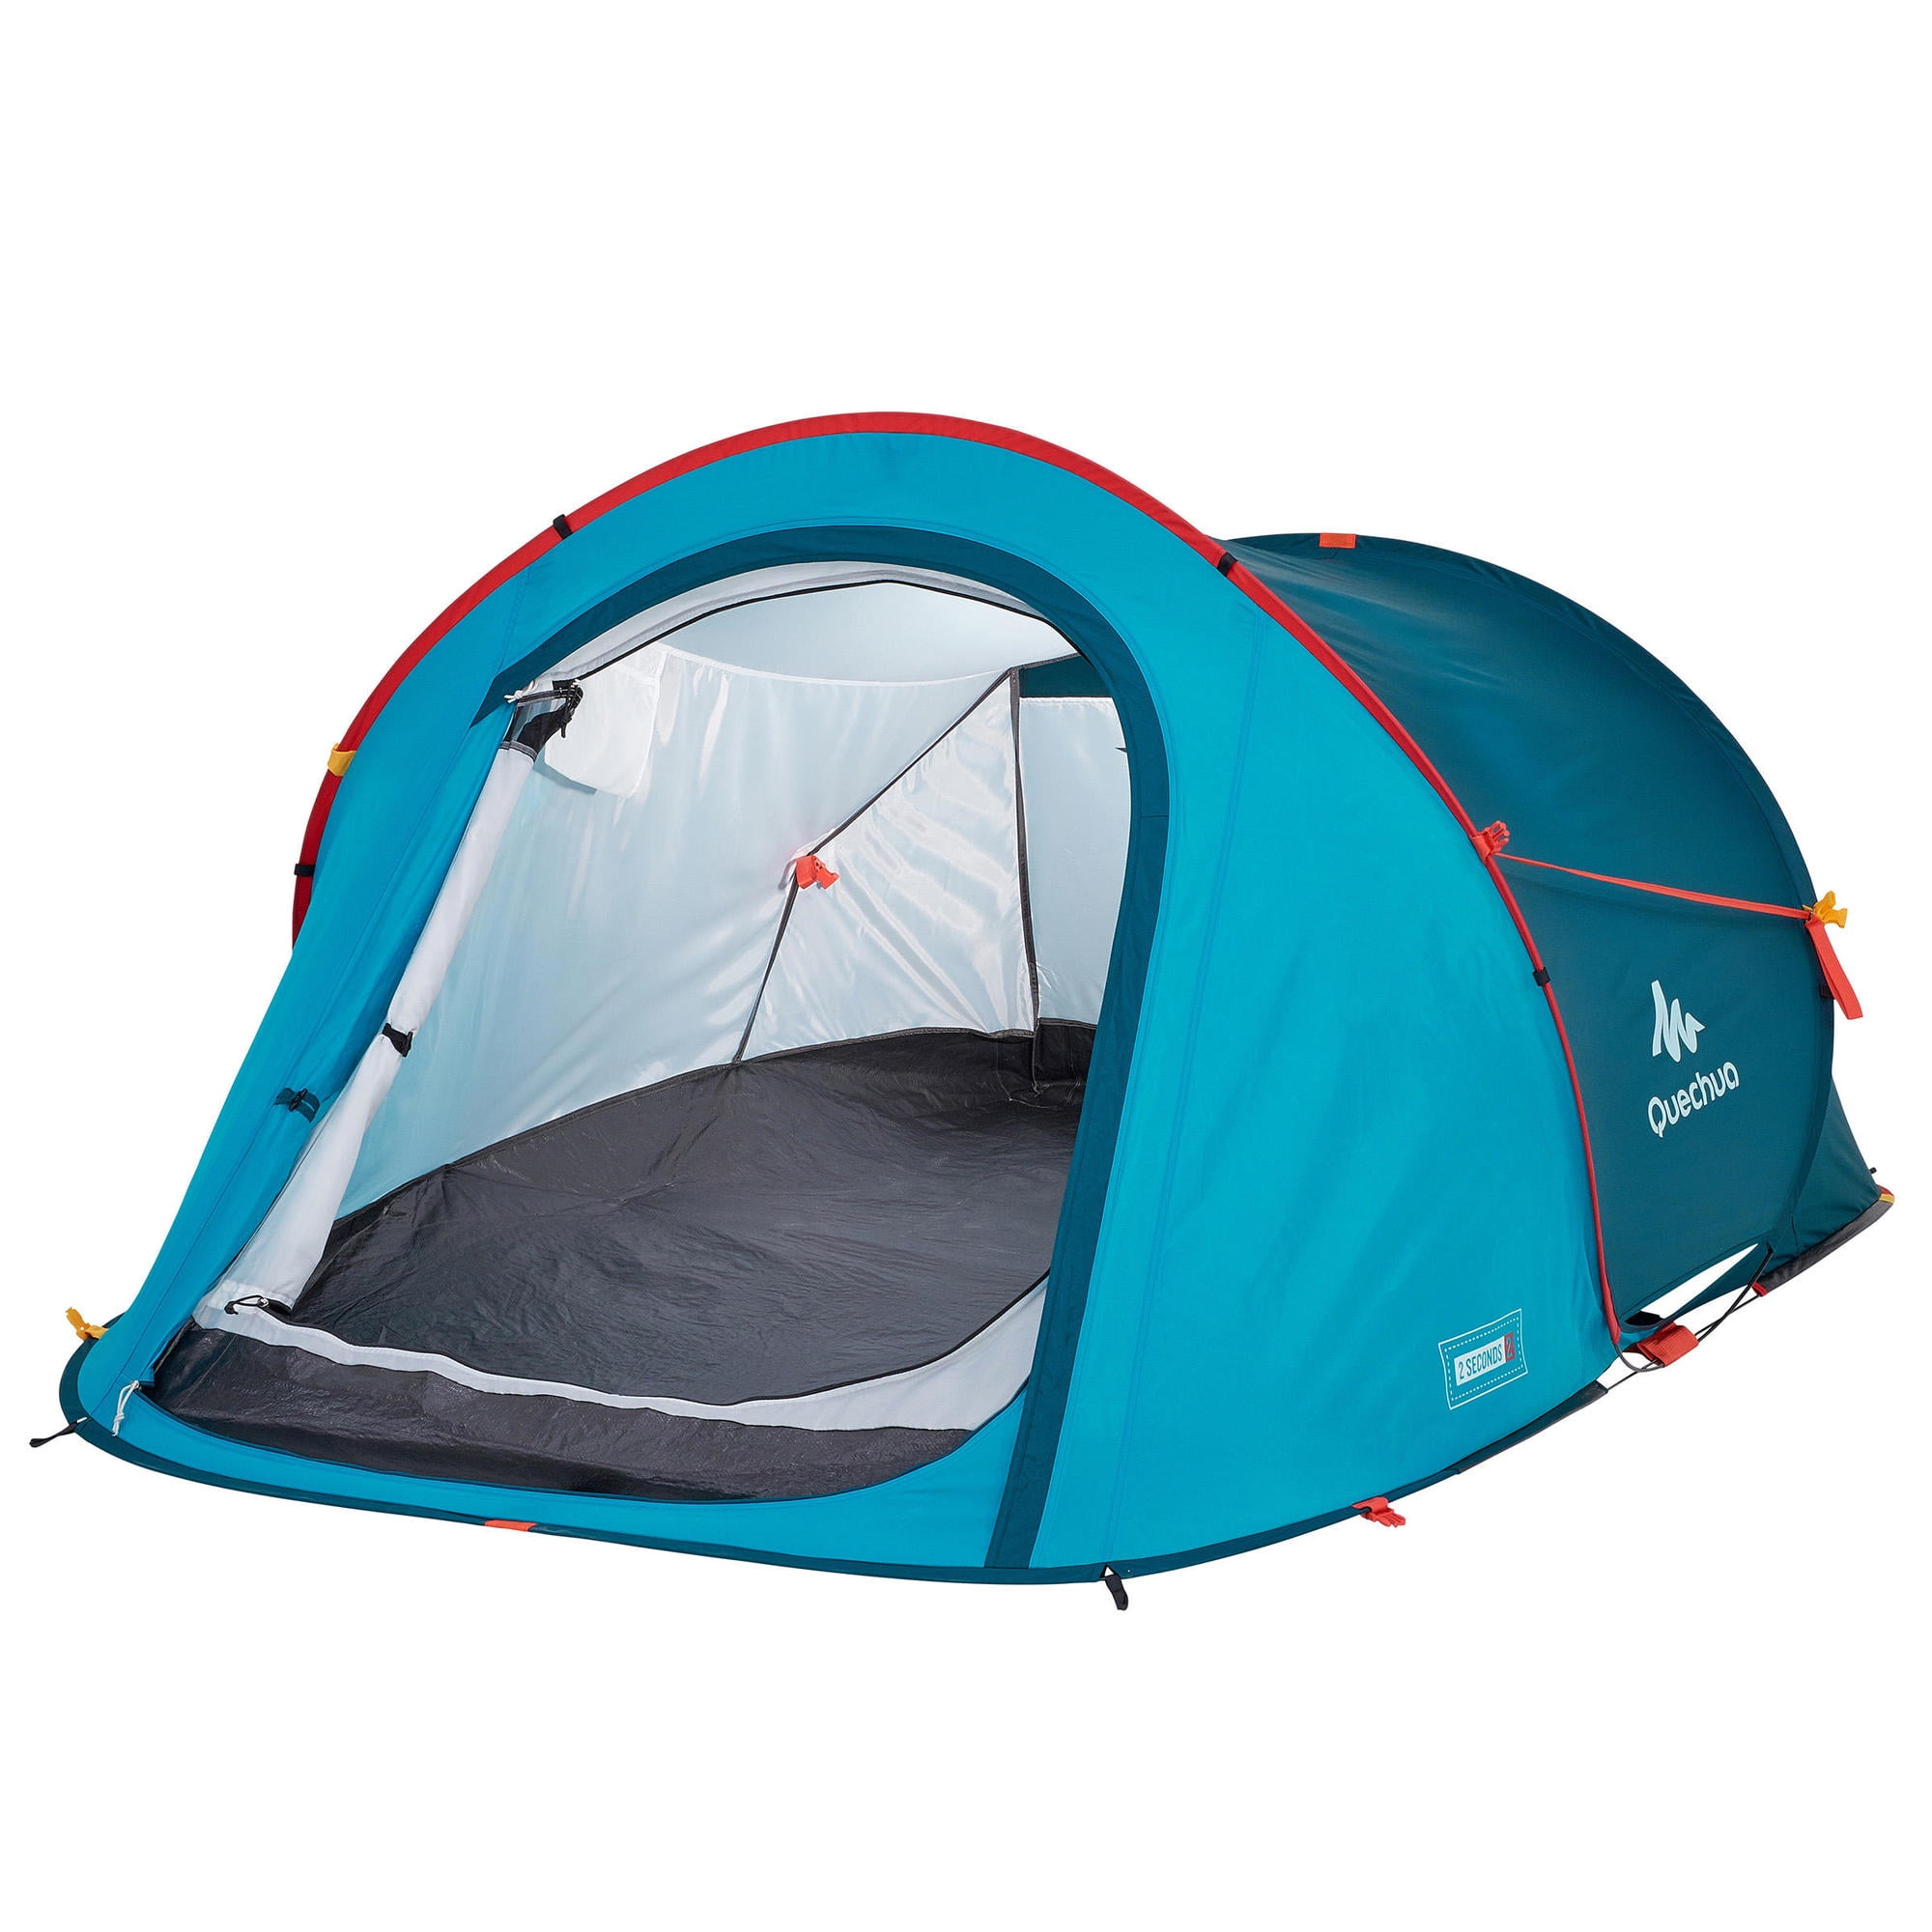 Decathlon Quechua Instant 2 Second Pop Up Portable Outdoor Camping Tent